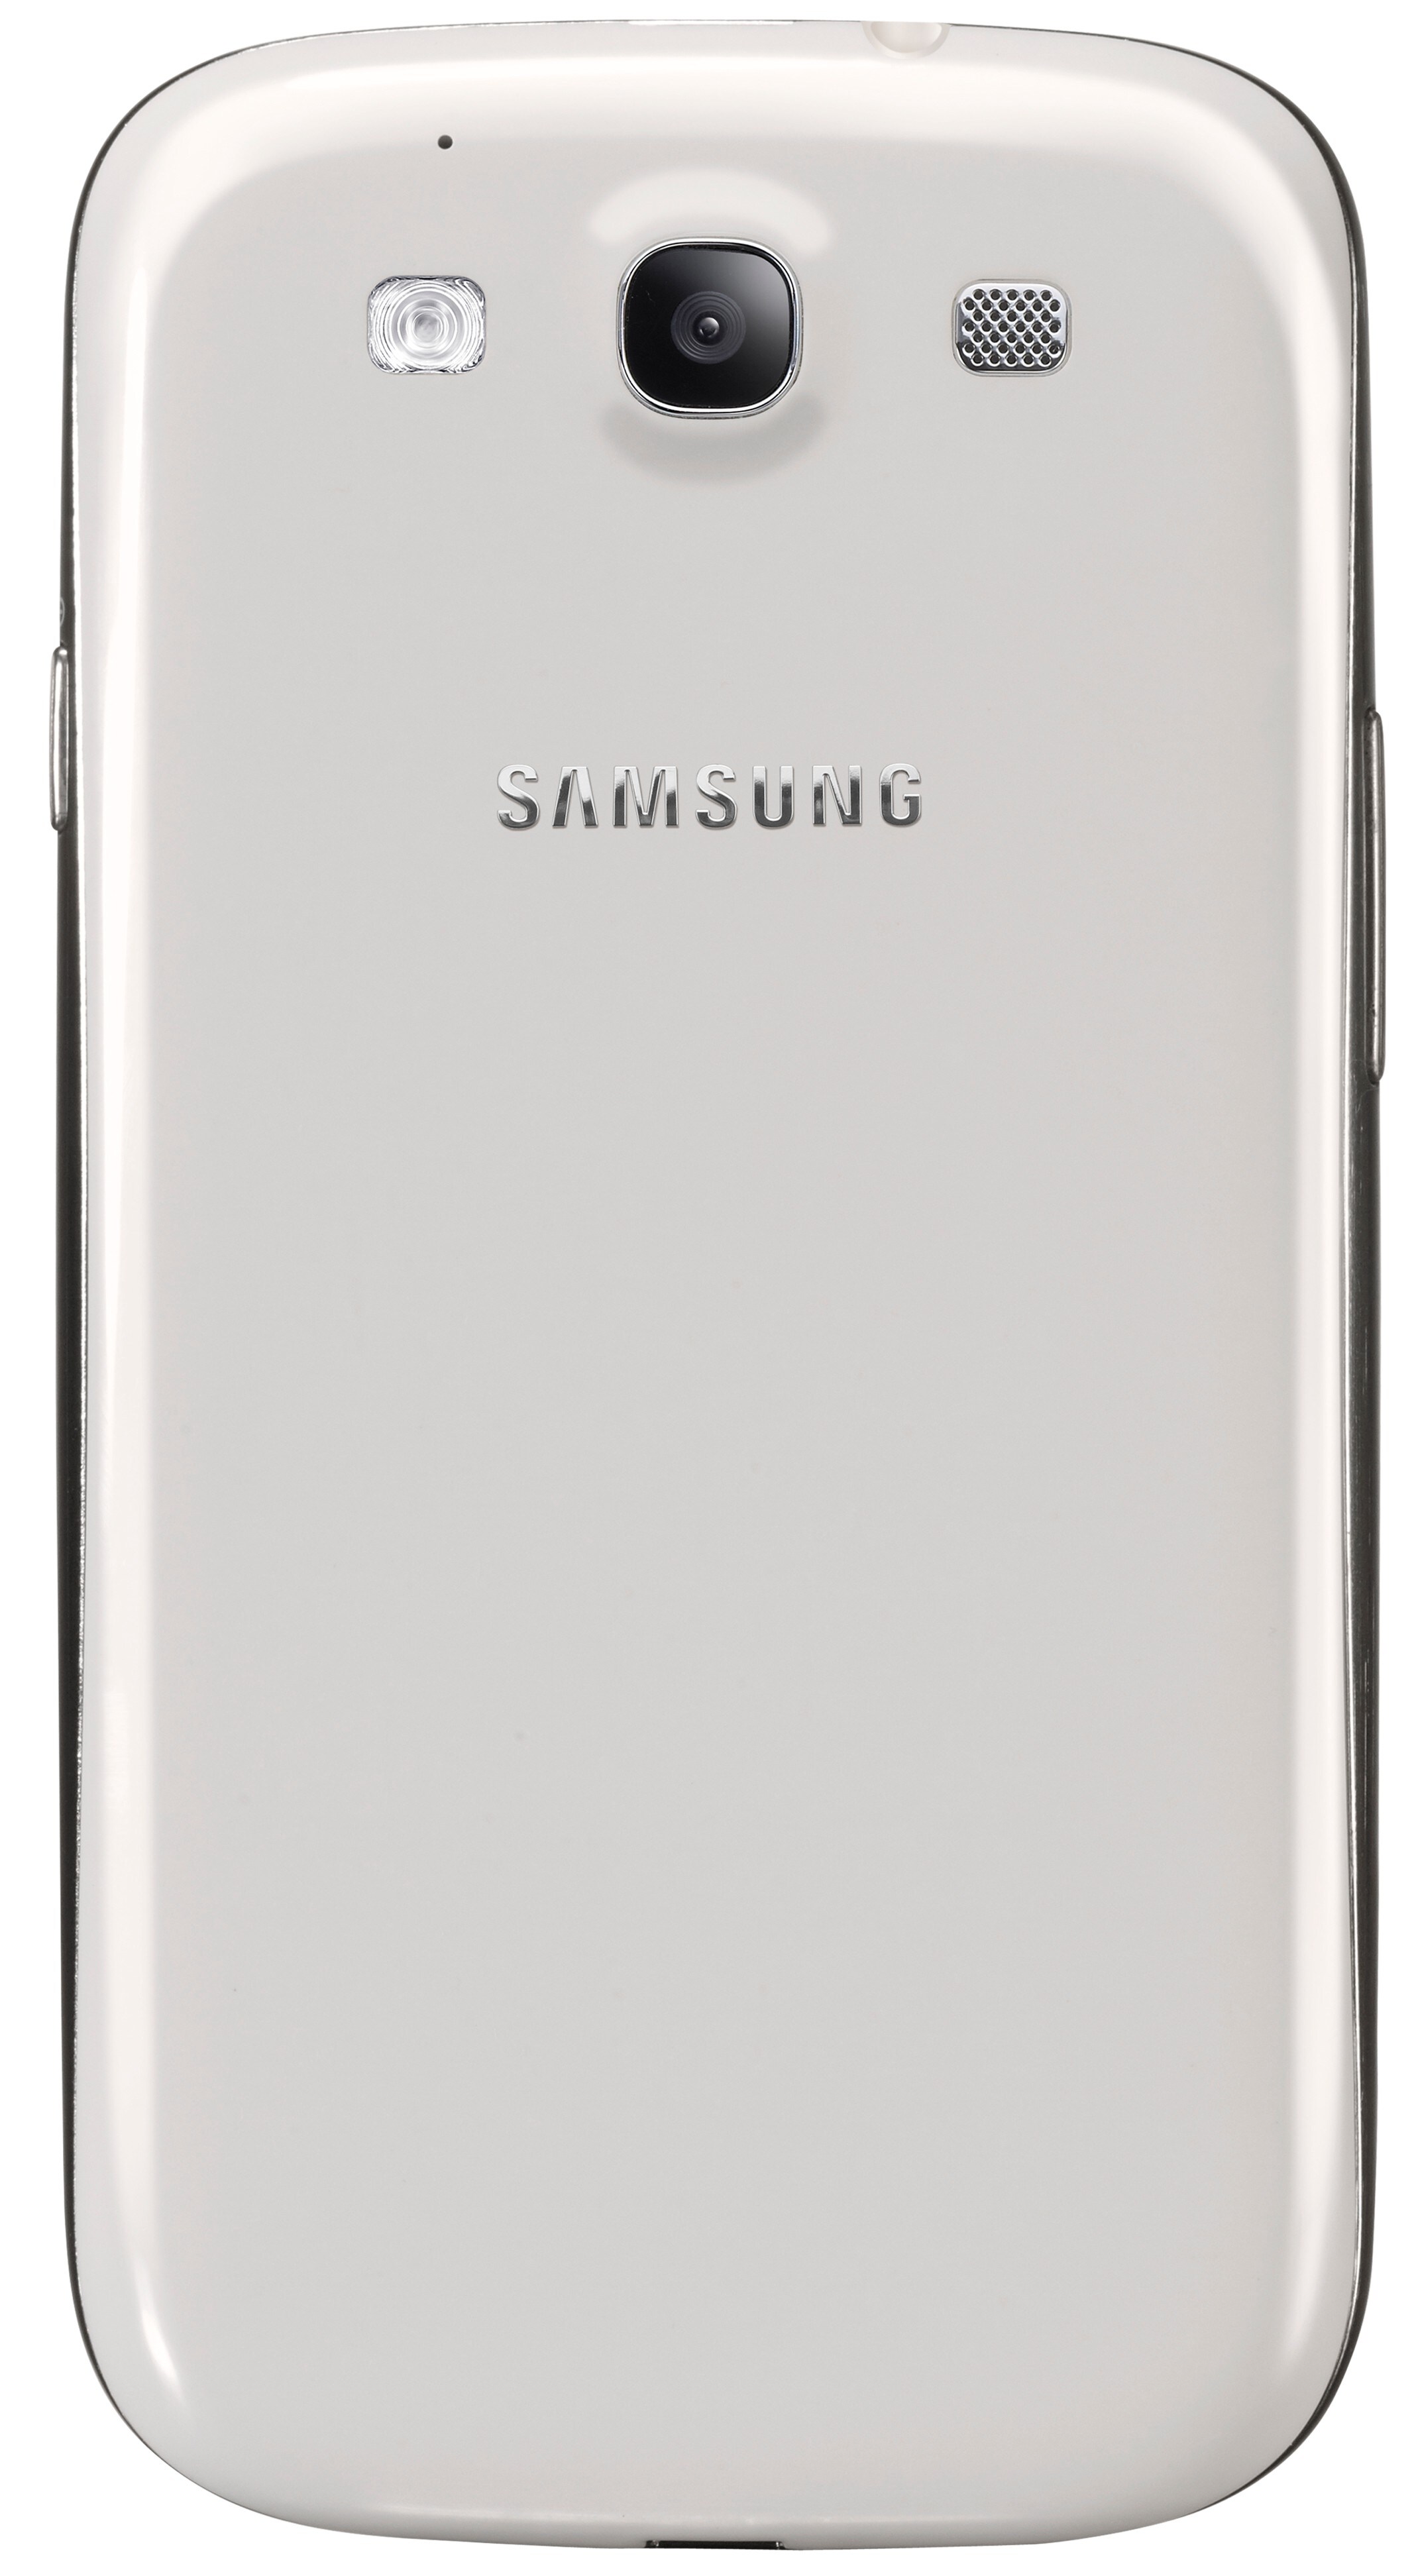 Samsung Galaxy S3 I9300 smarttelefon (hvit) - Mobiltelefon - Elkjøp